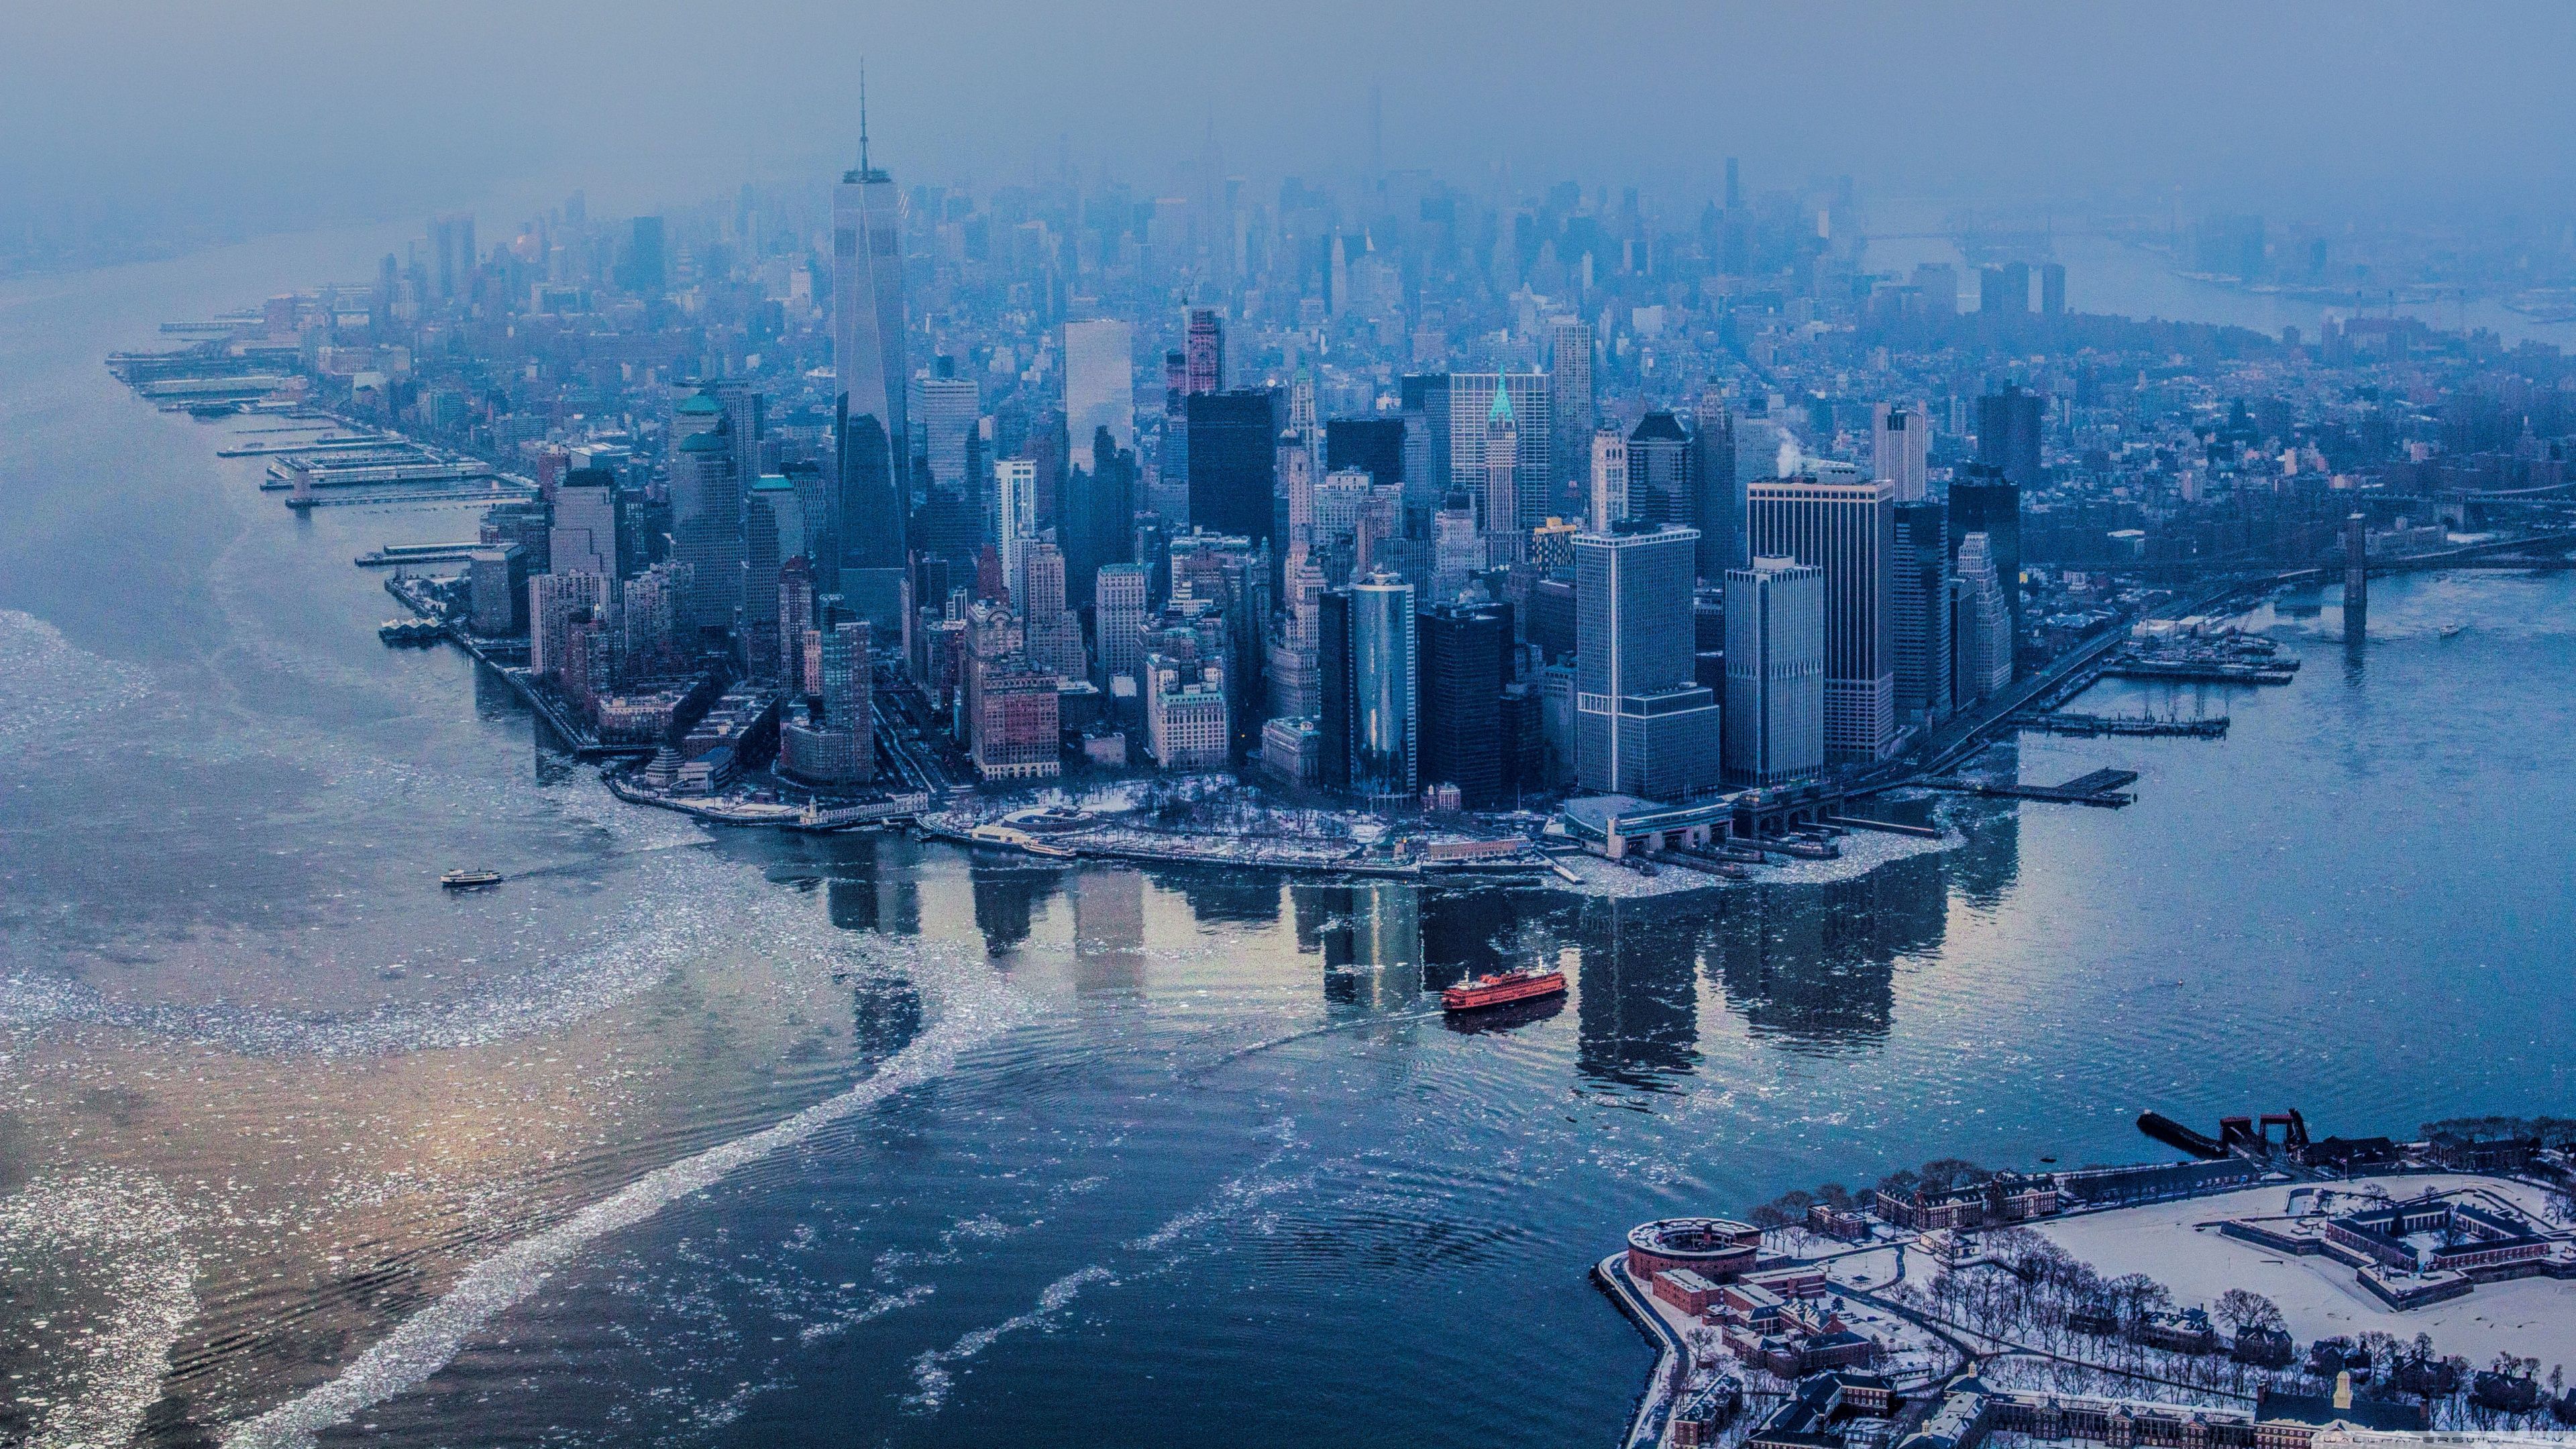 New York City Aerial View. New york wallpaper, New york city image, New york city background